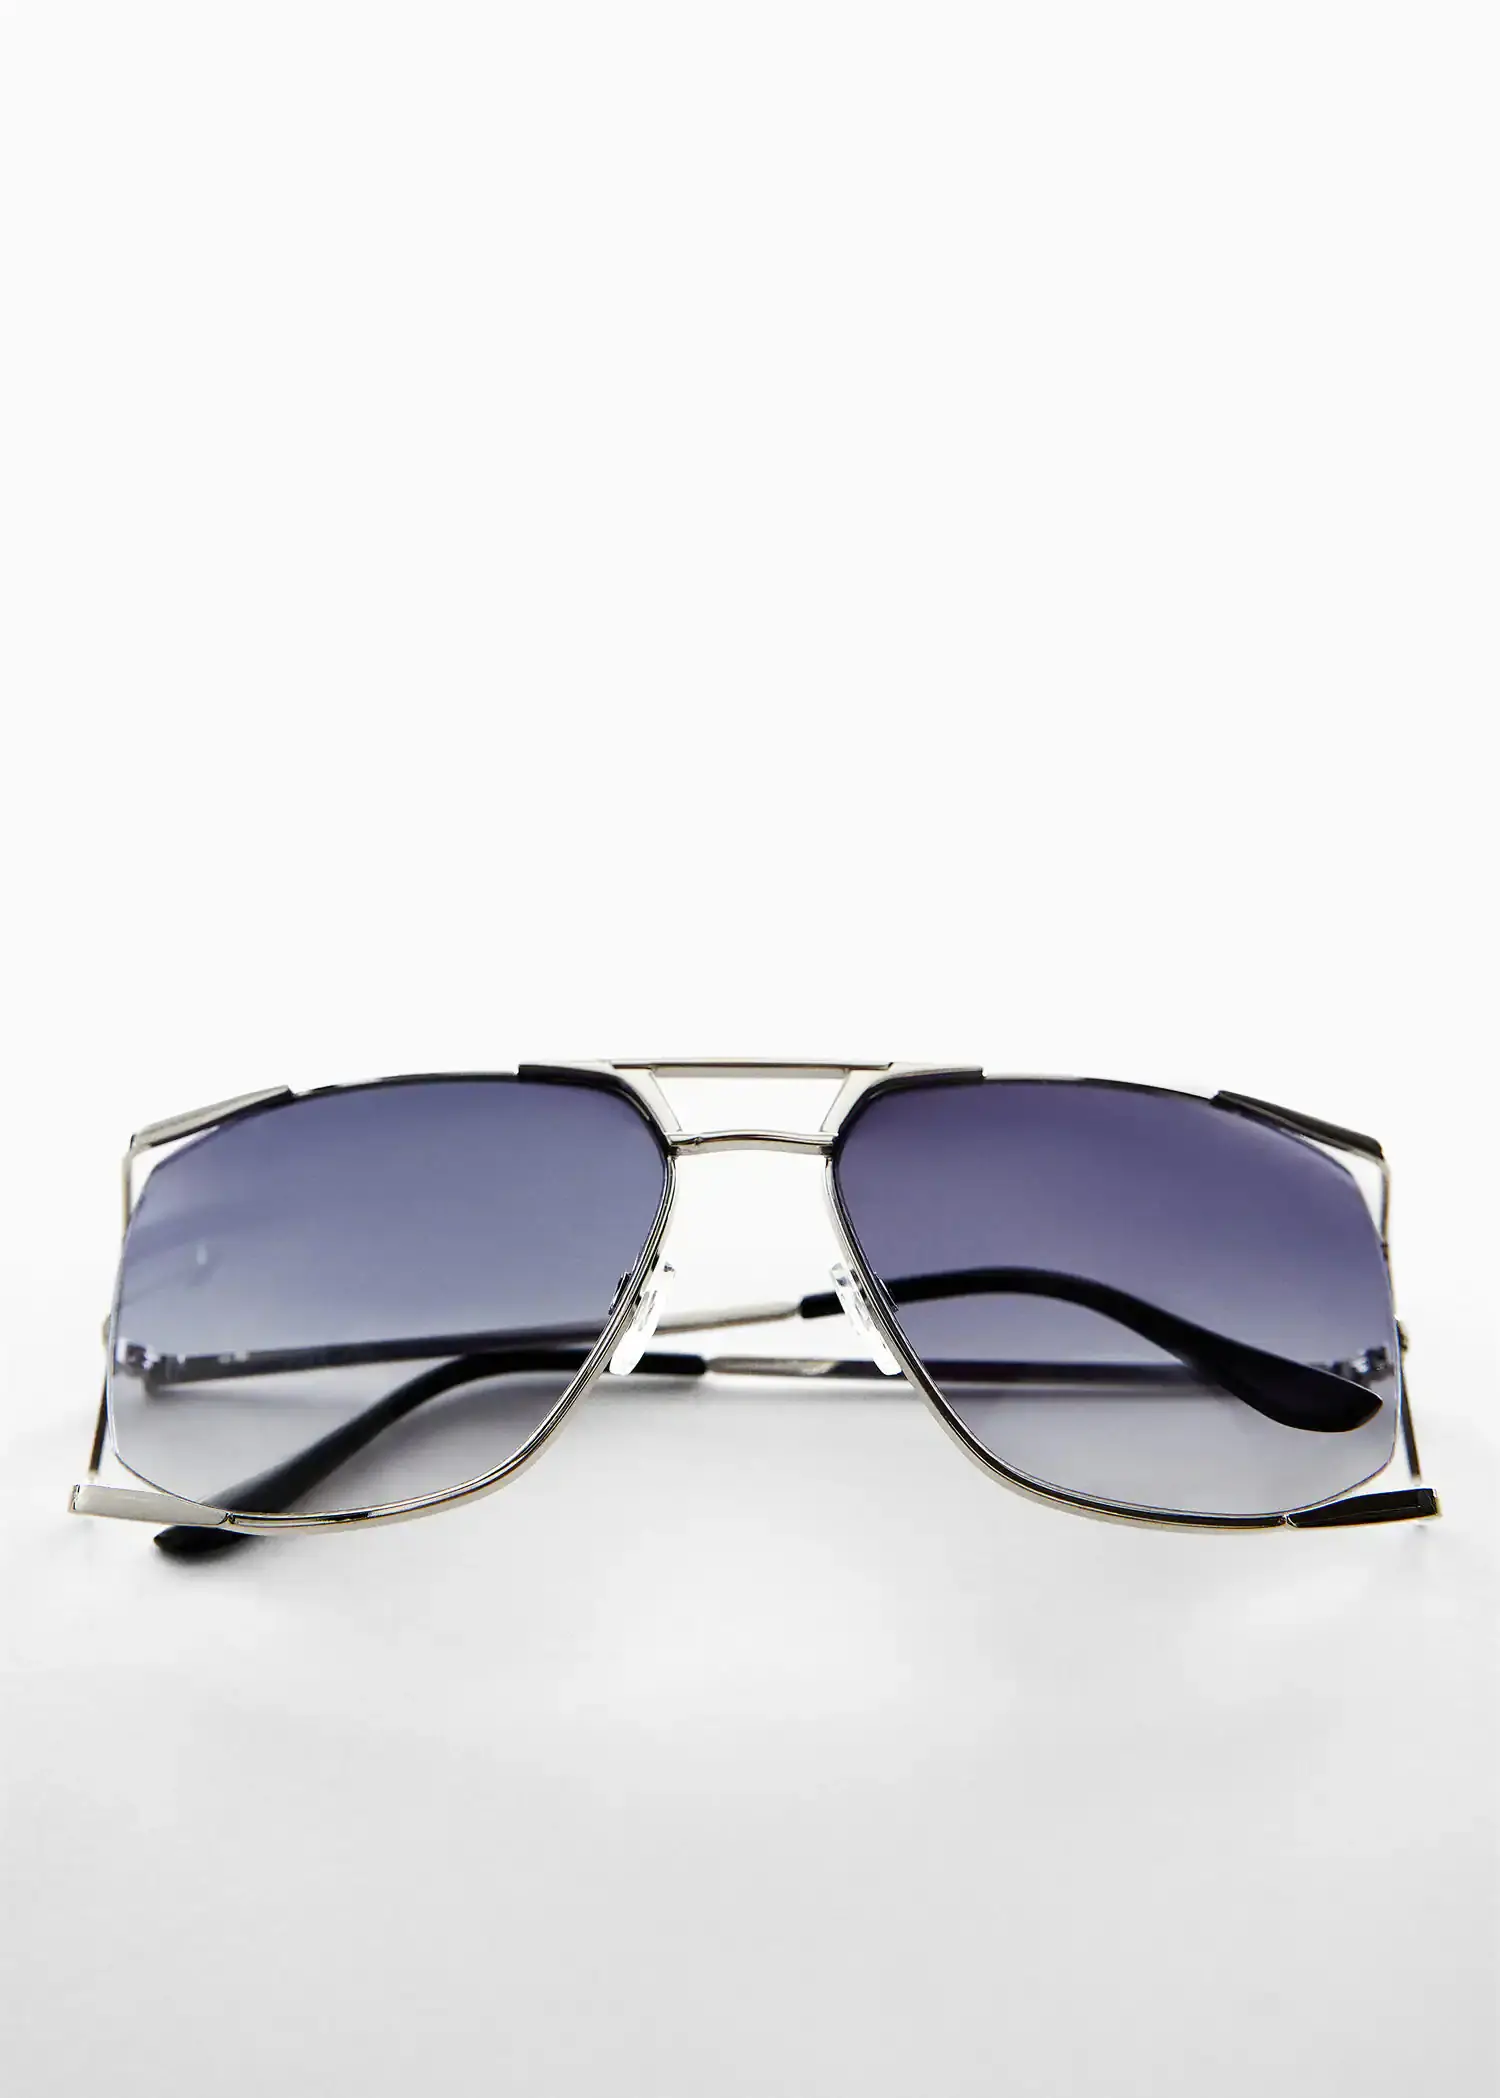 Mango Metallic frame sunglasses. 1